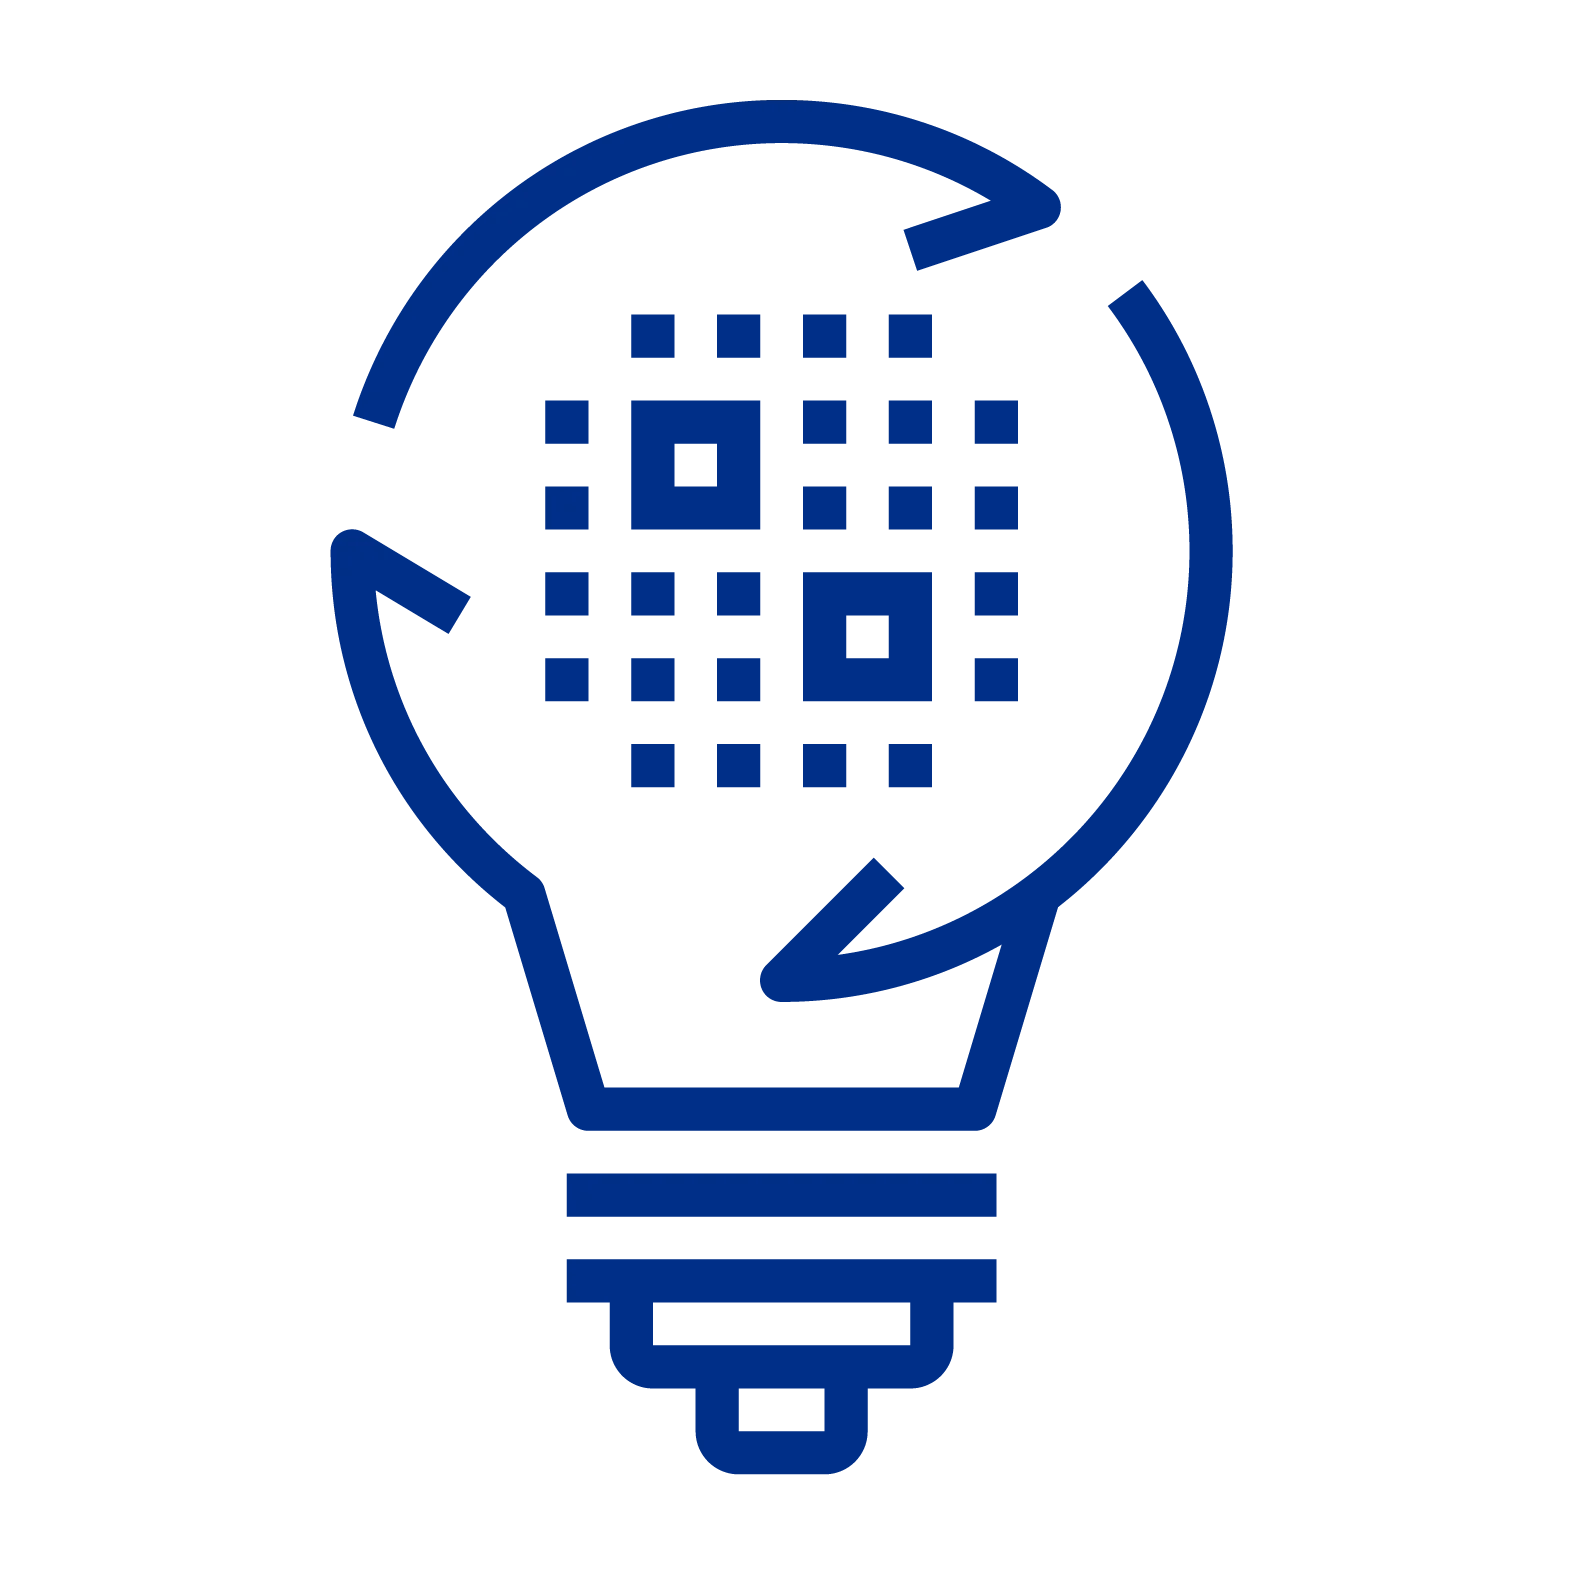 A blue light bulb icon